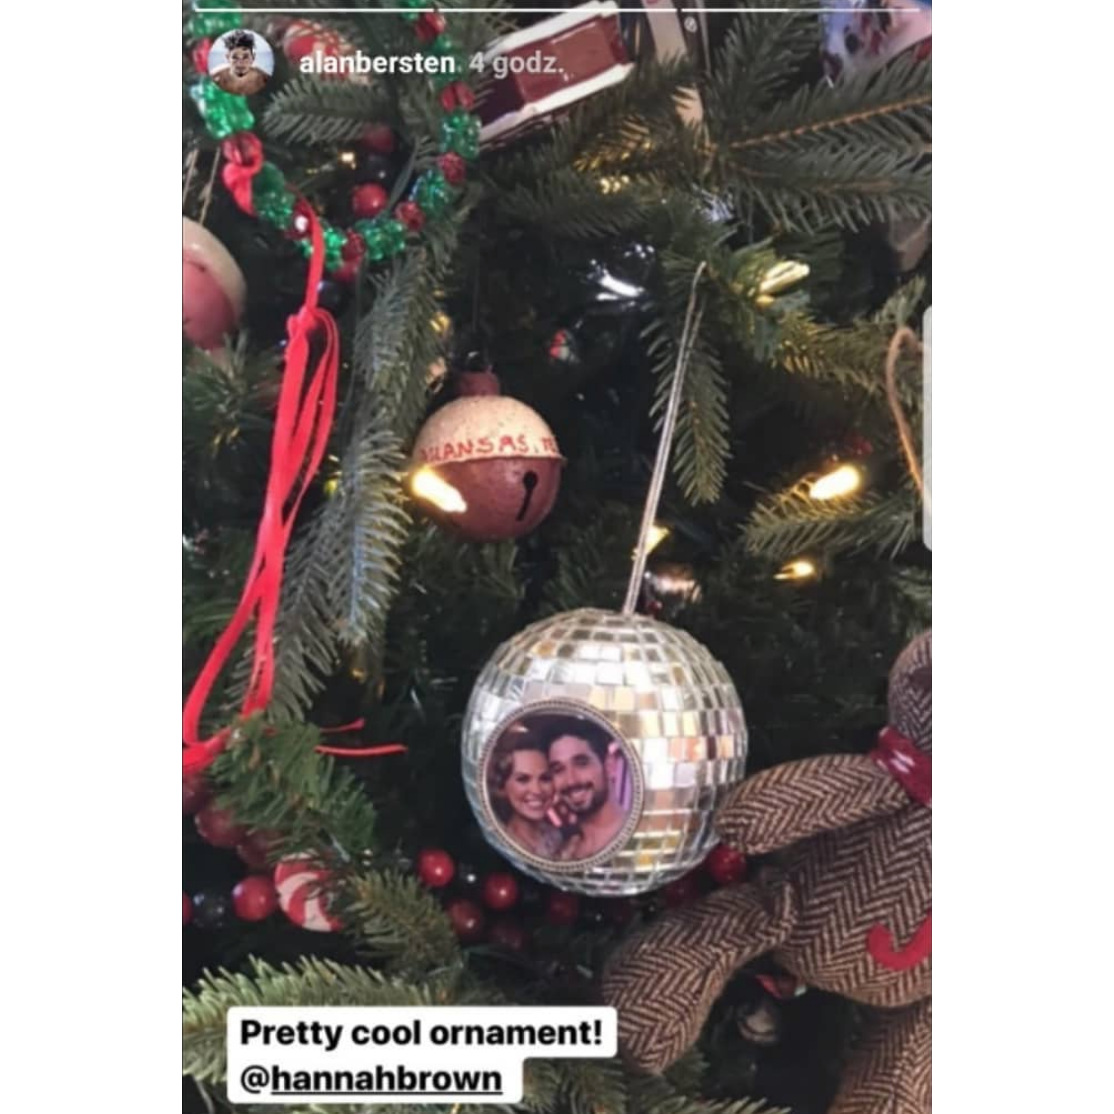 Alan Bersten Puts a Hannah Brown Ornament on His Christmas Tree